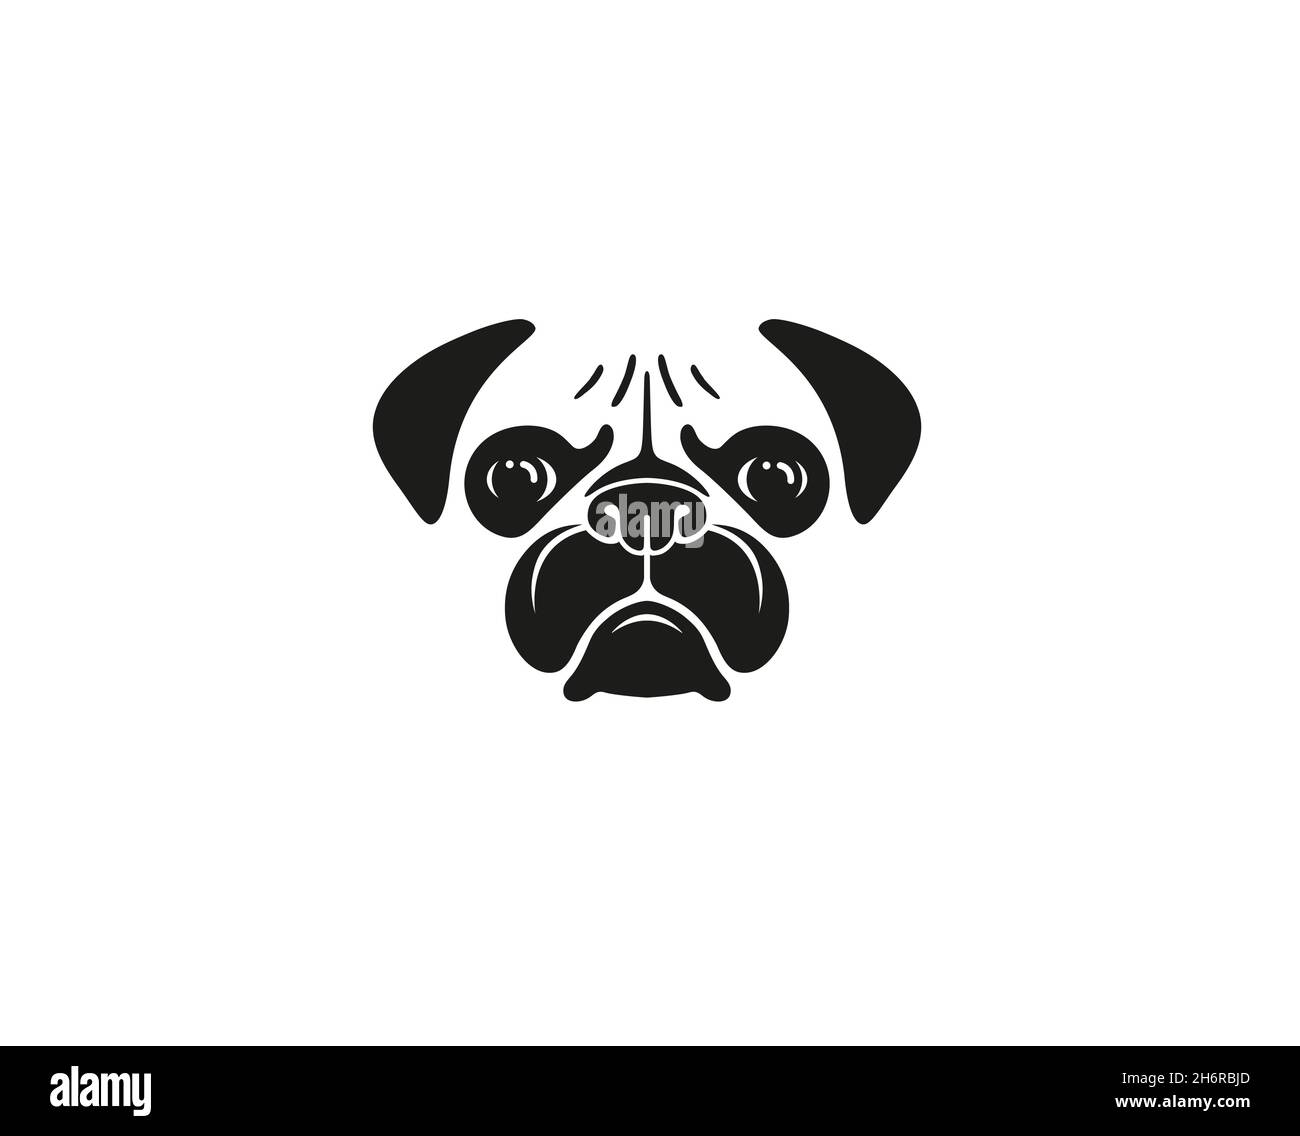 dog head logo vector design icon illustration Stock Vector